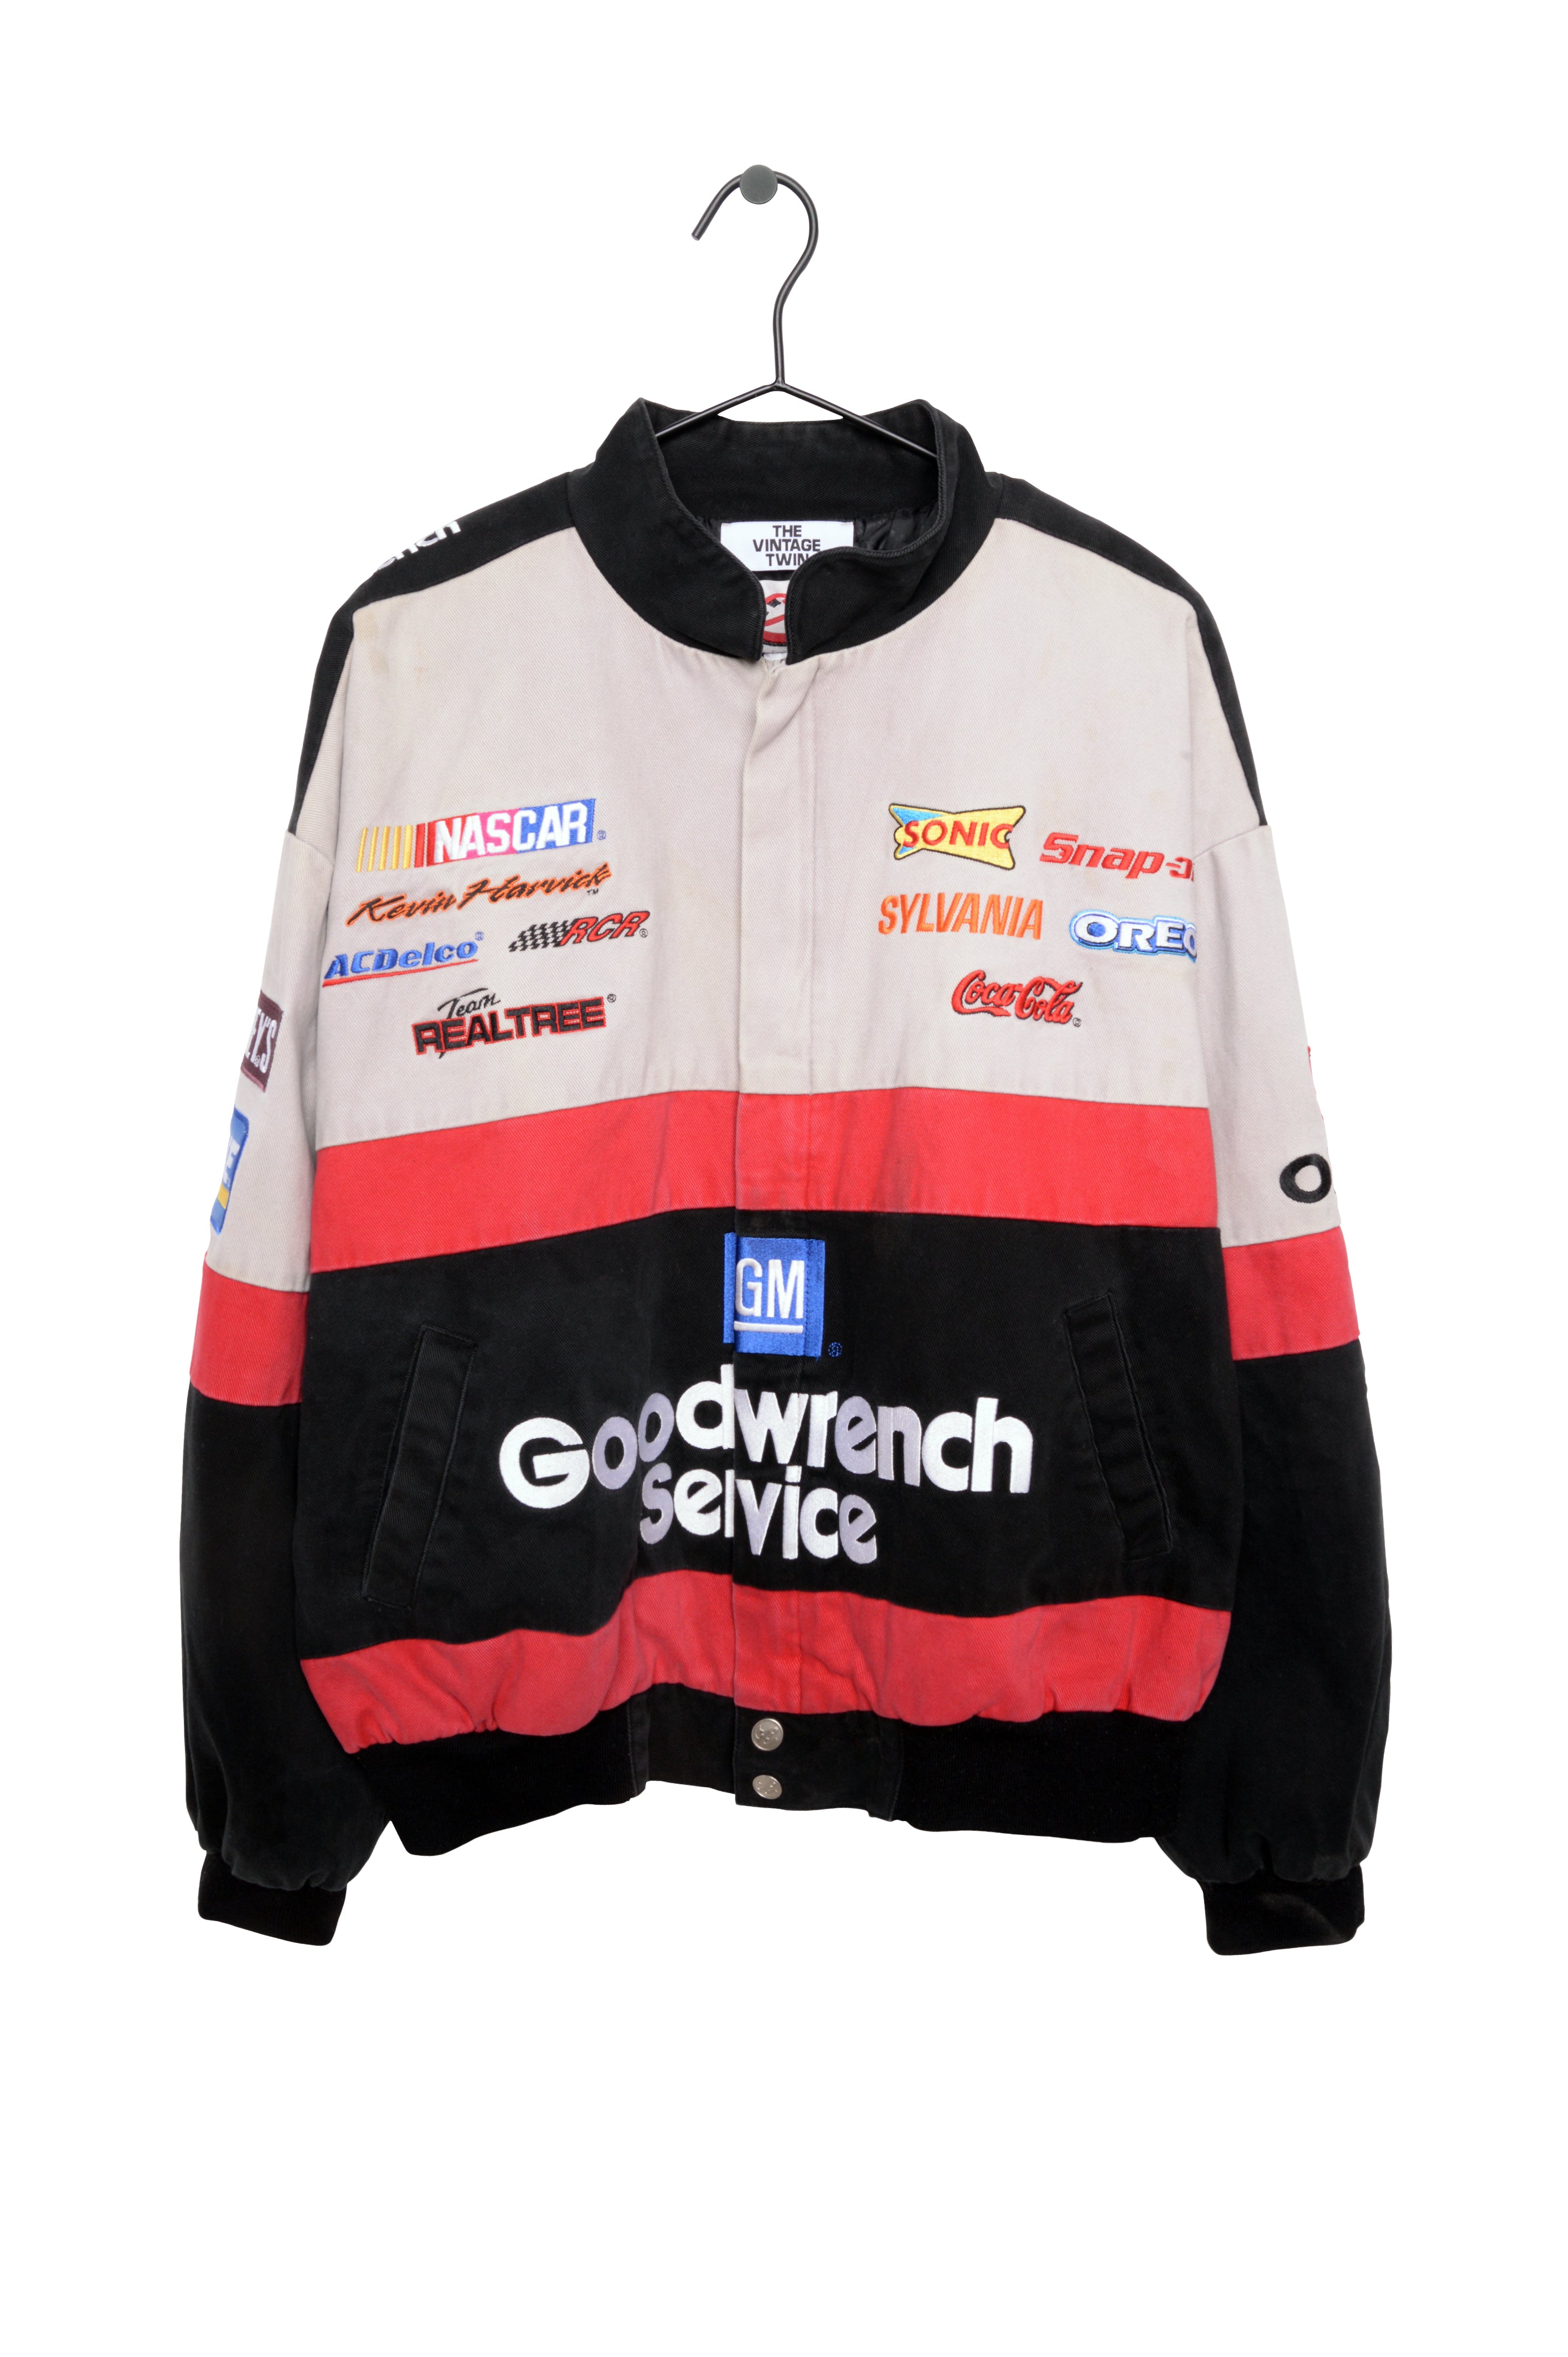 Goodwrench NASCAR Racing Jacket